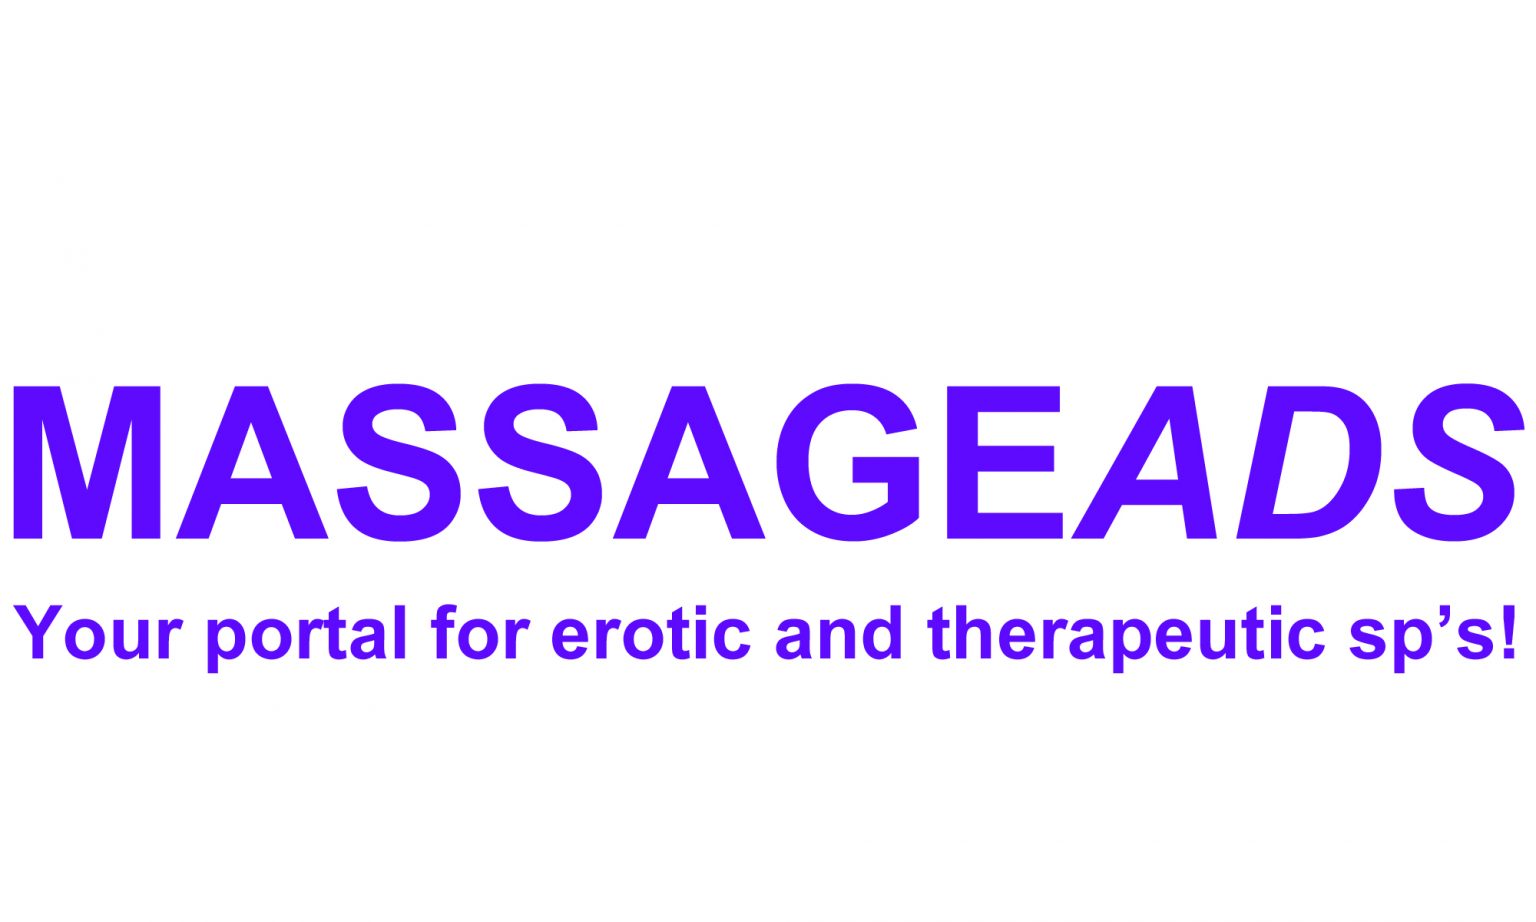 D D C Baf Ae E E Massage Ads